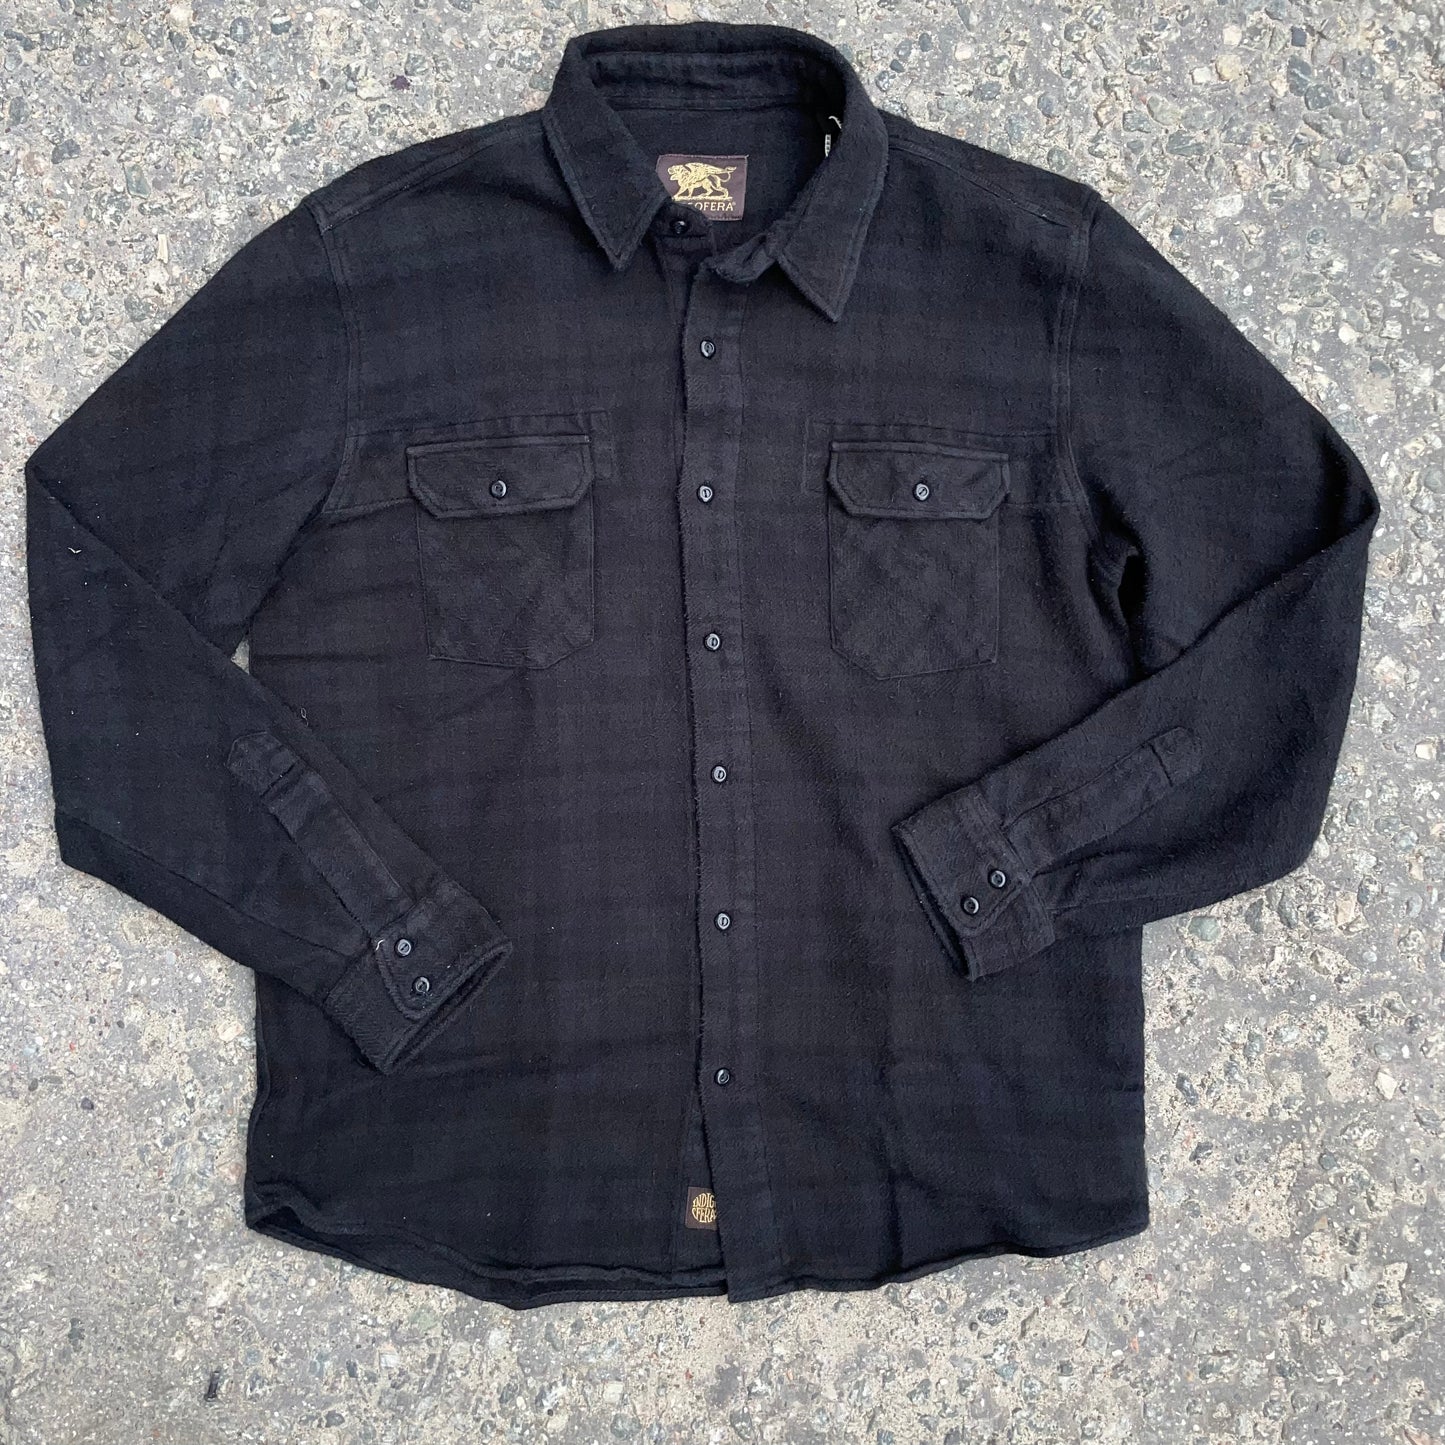 Indigofera - Bryson Flannel Shirt Black Overdyed Check